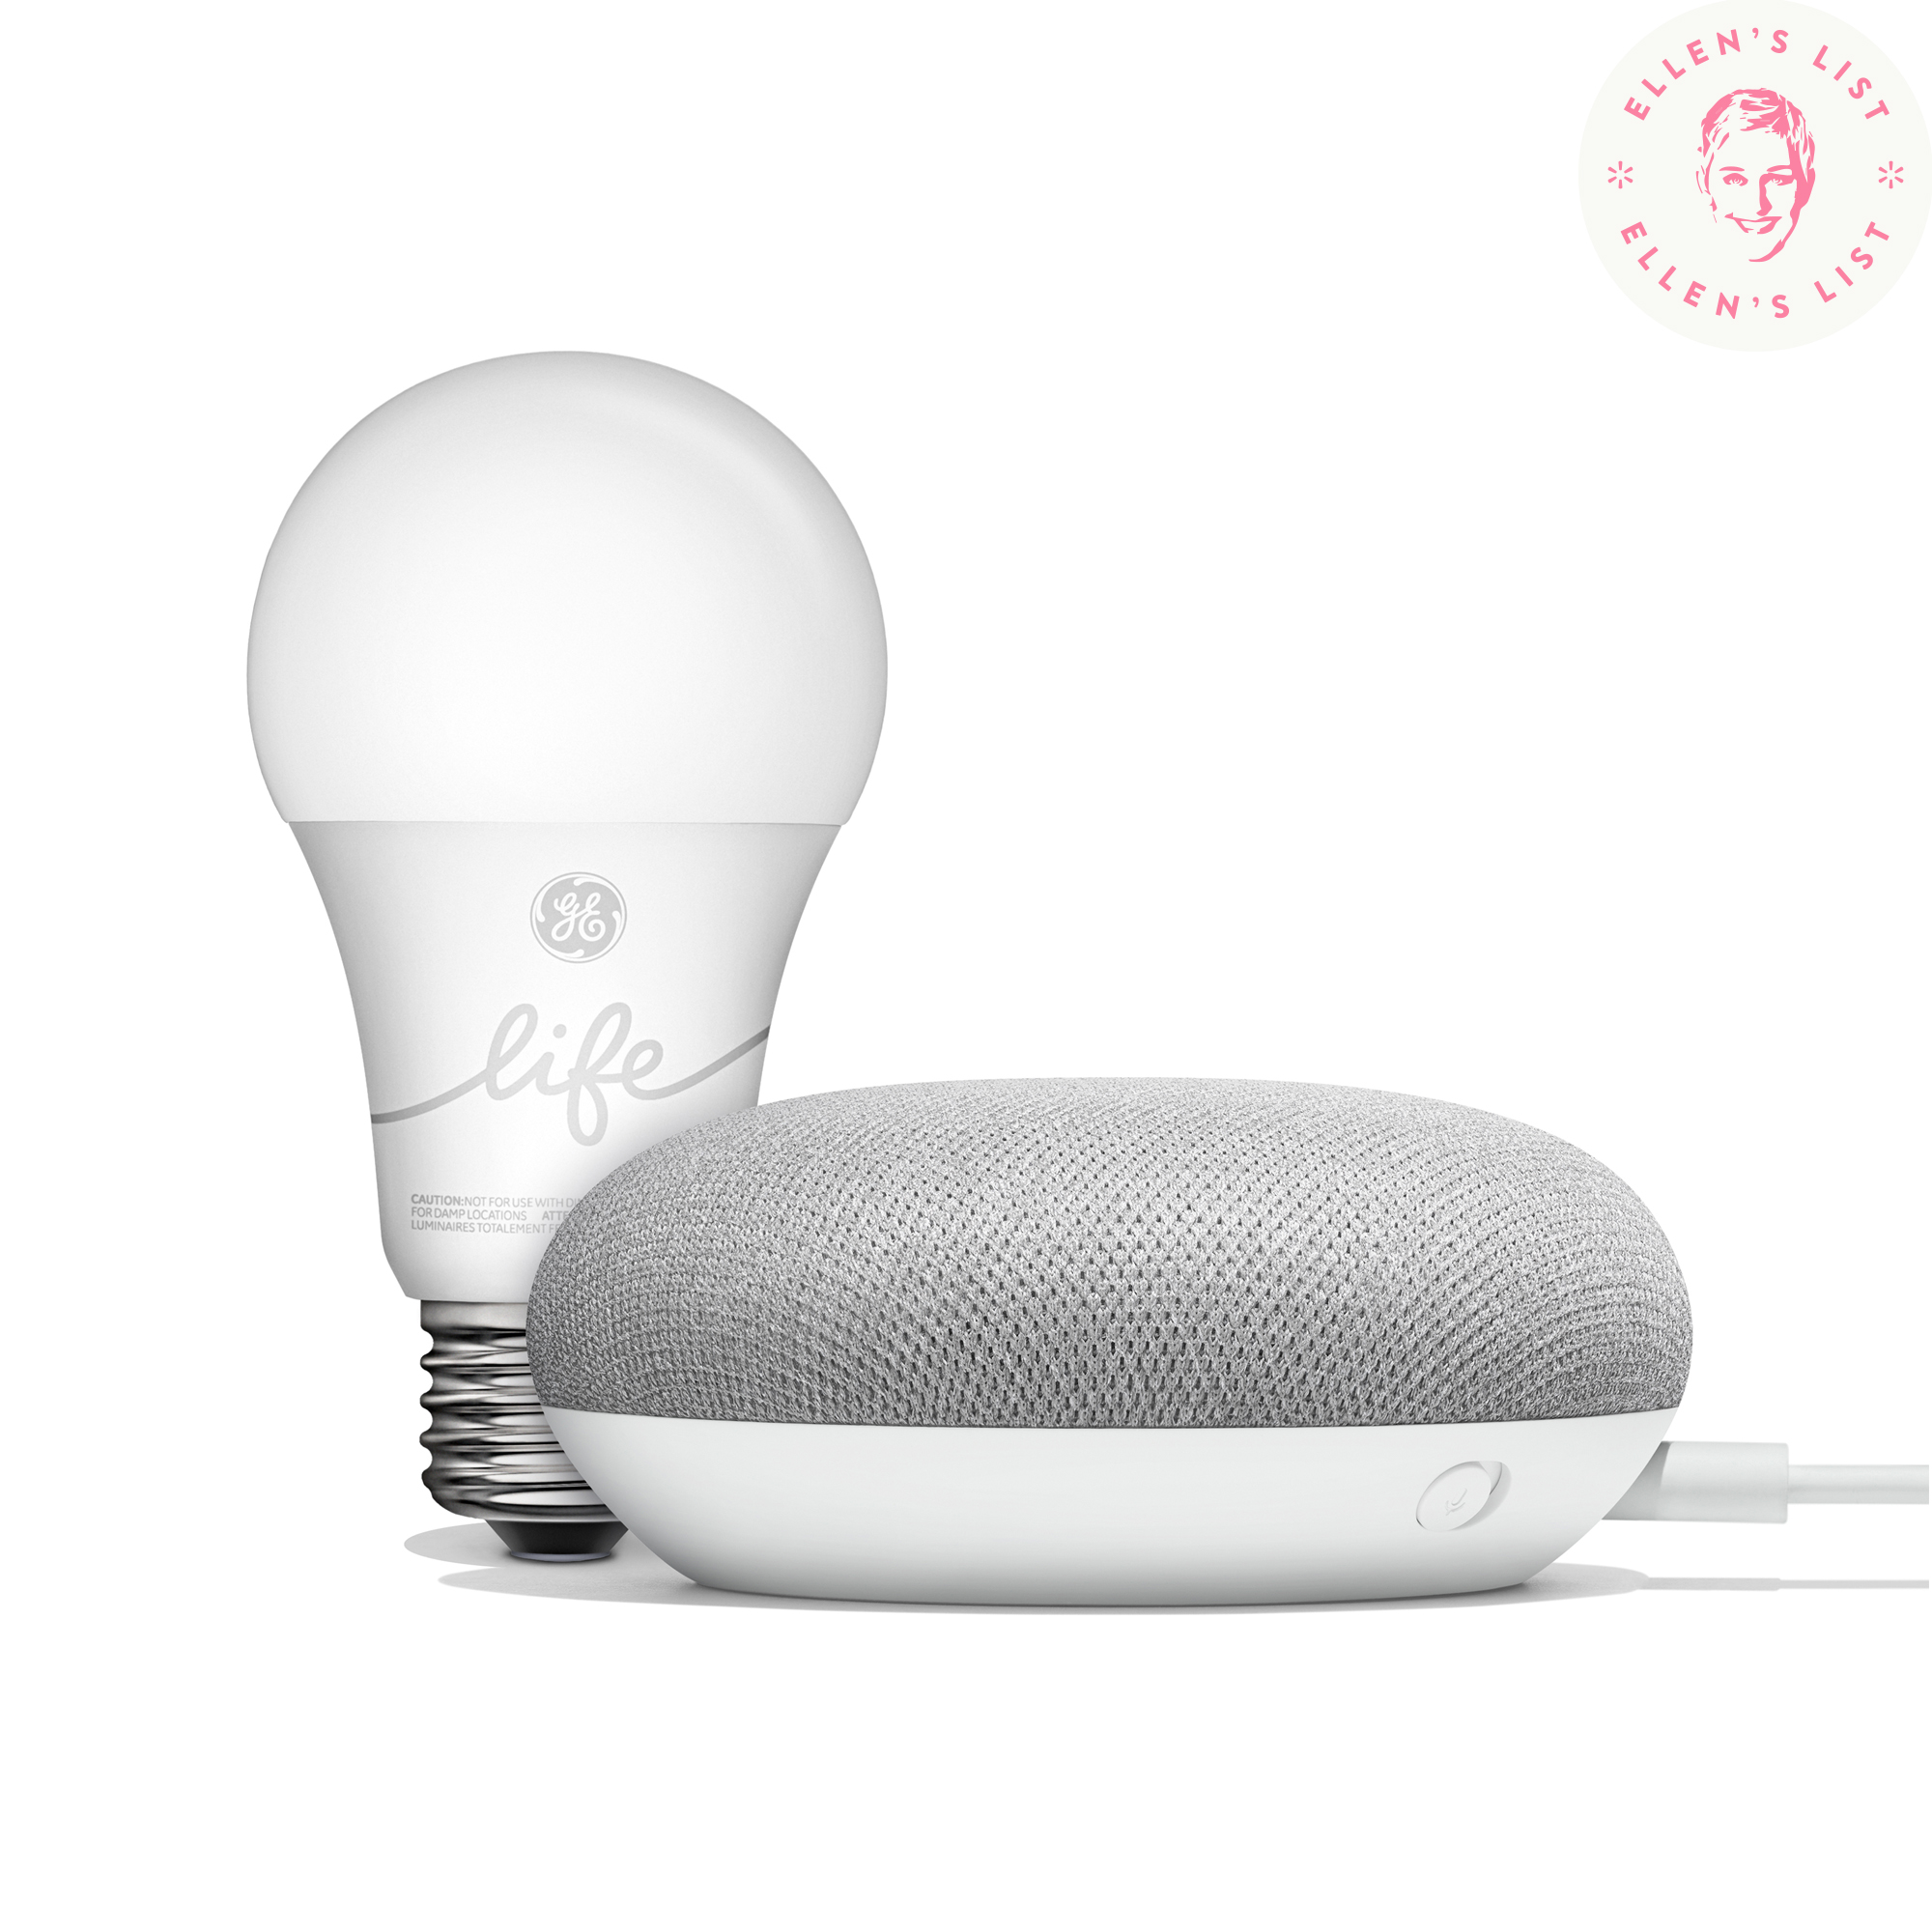 Google Smart Light Starter Kit - Google Home Mini and GE C-Life Smart Light Bulb - image 2 of 5